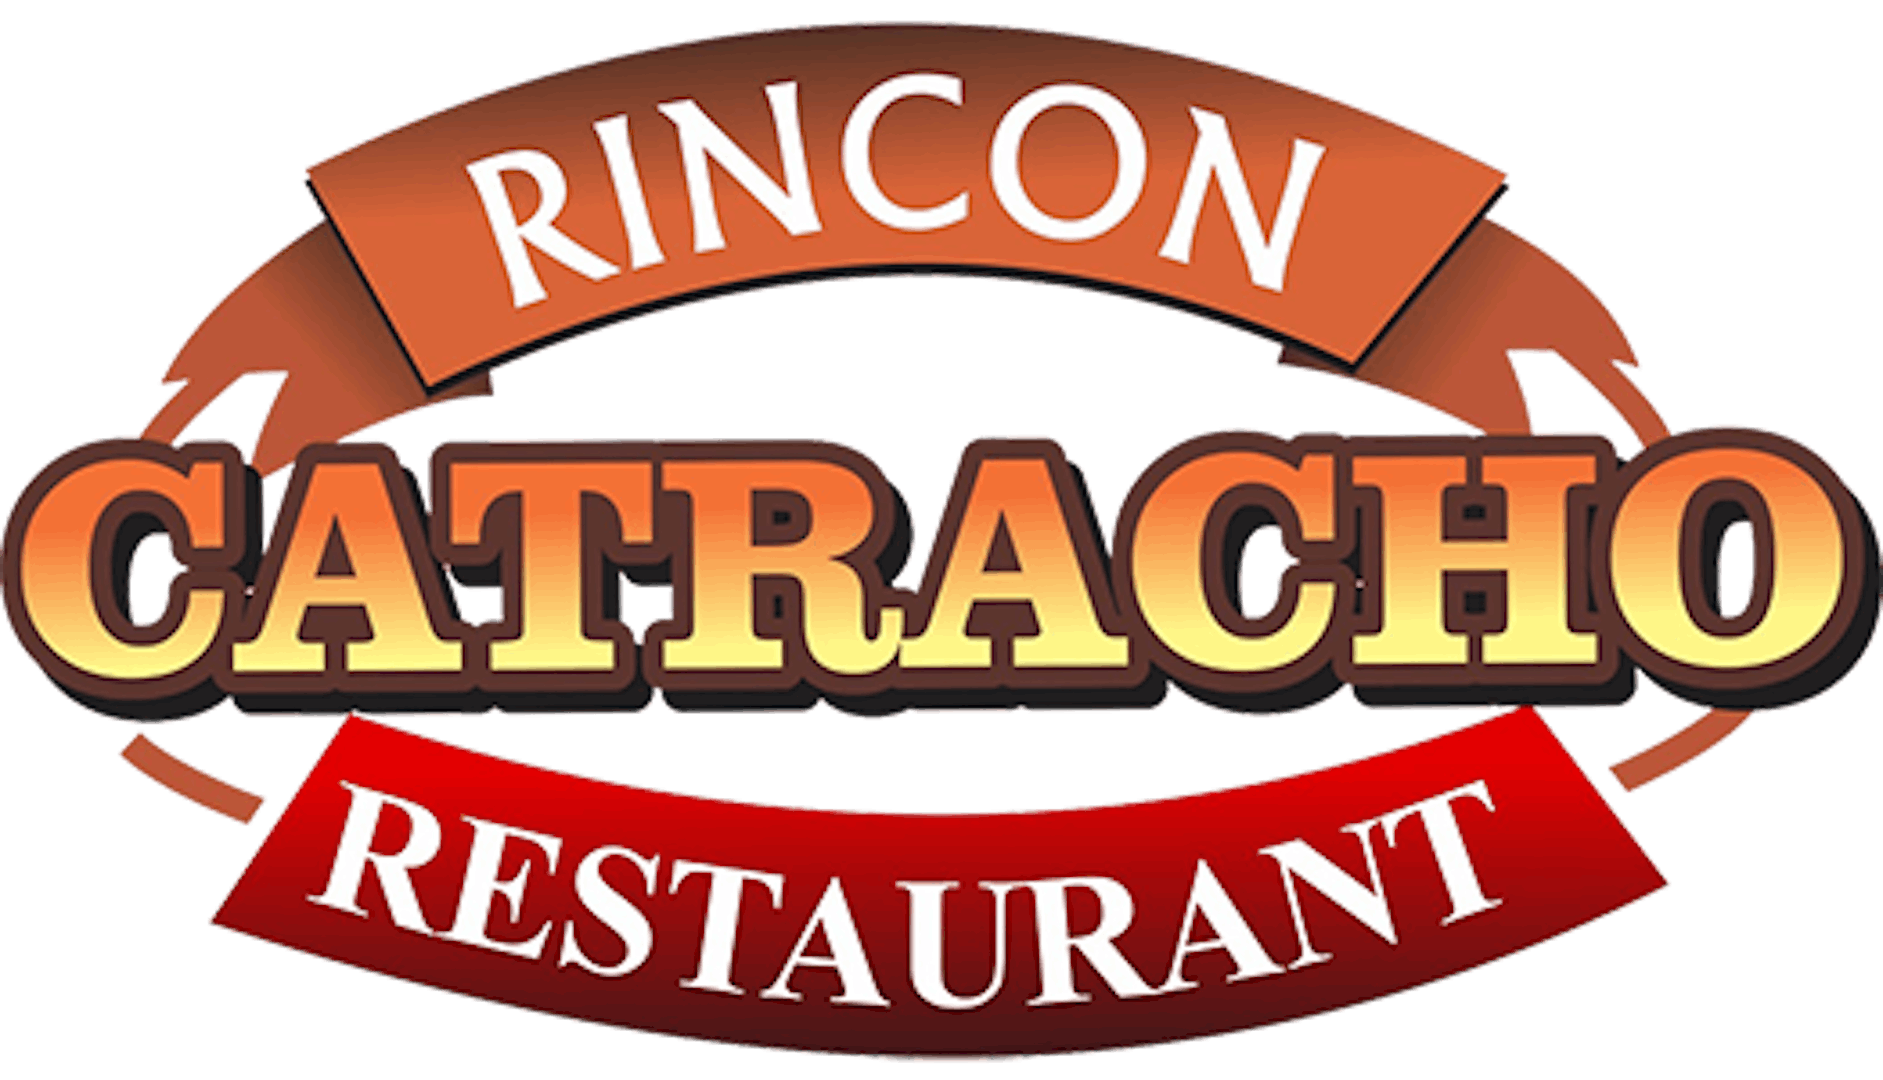 Rincon Catracho Restaurant LLC